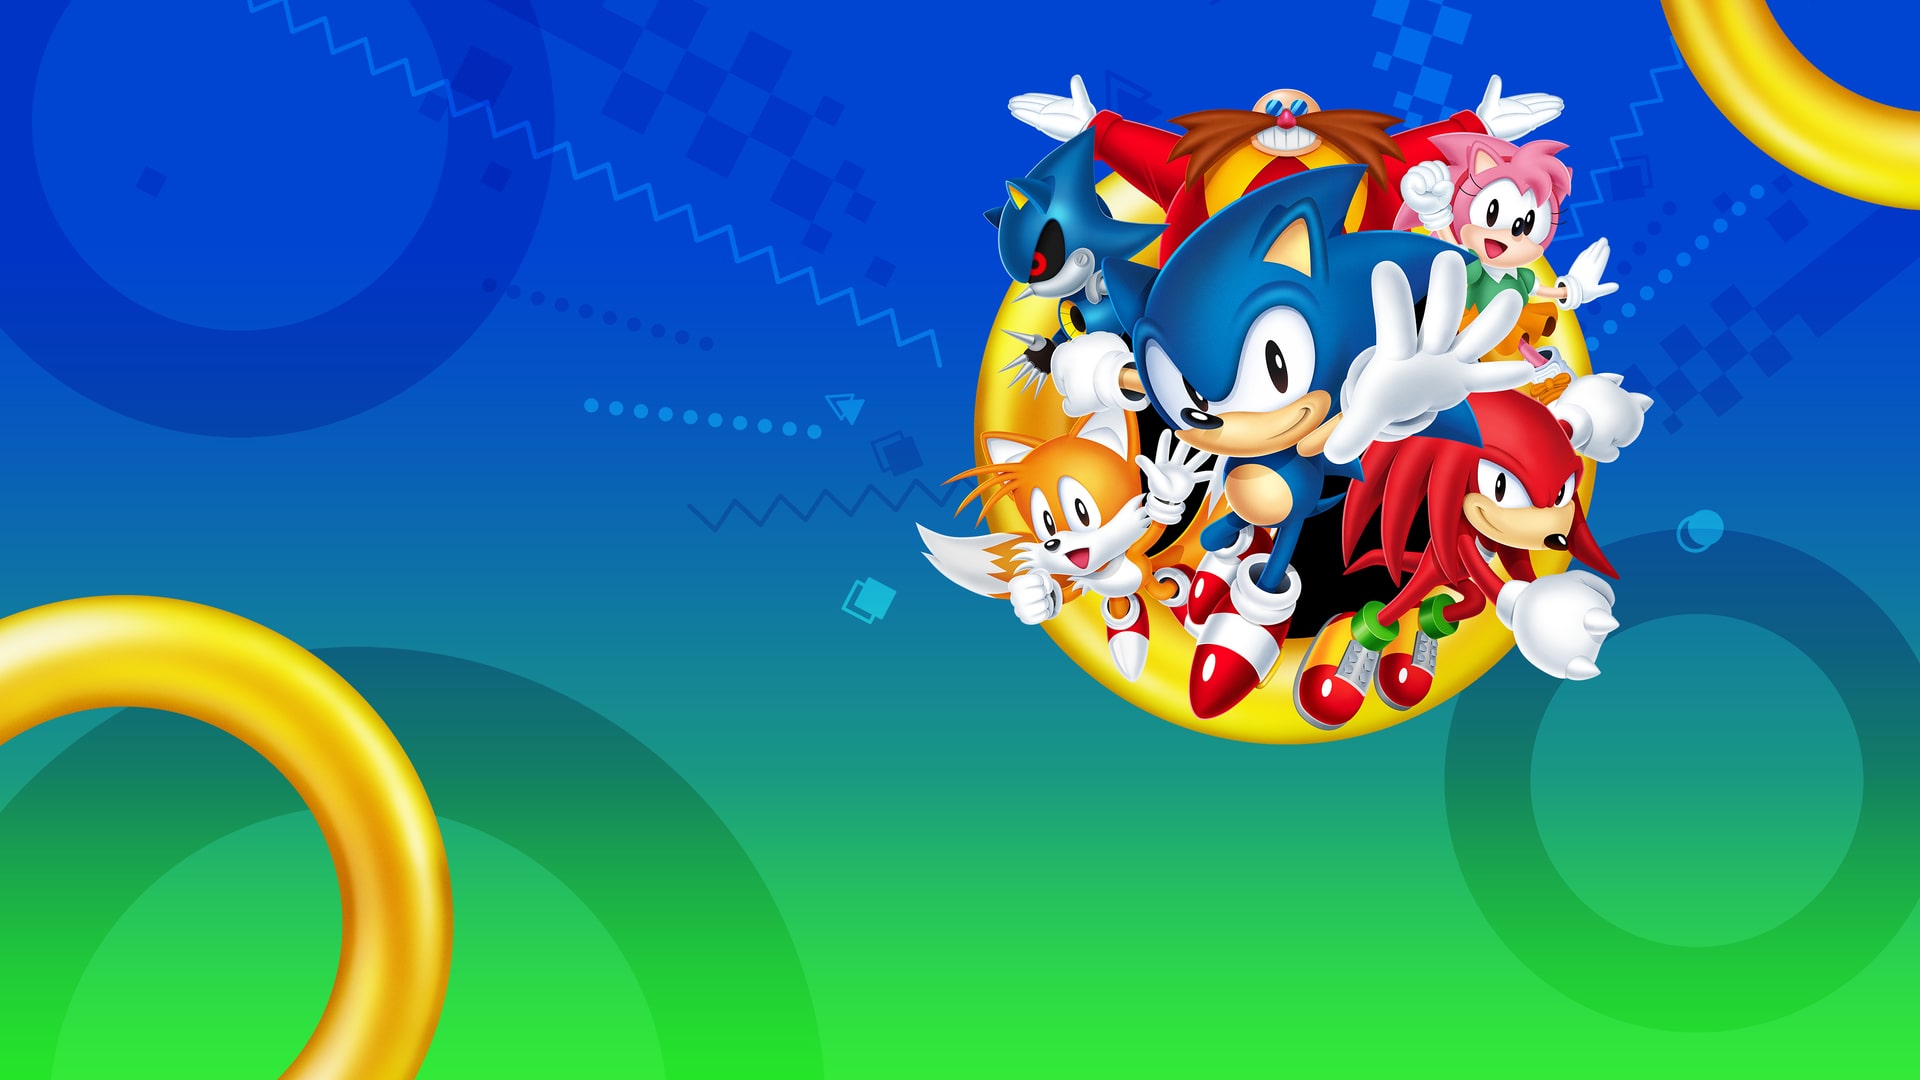  Sonic Origins Plus - PlayStation 4 : Movies & TV